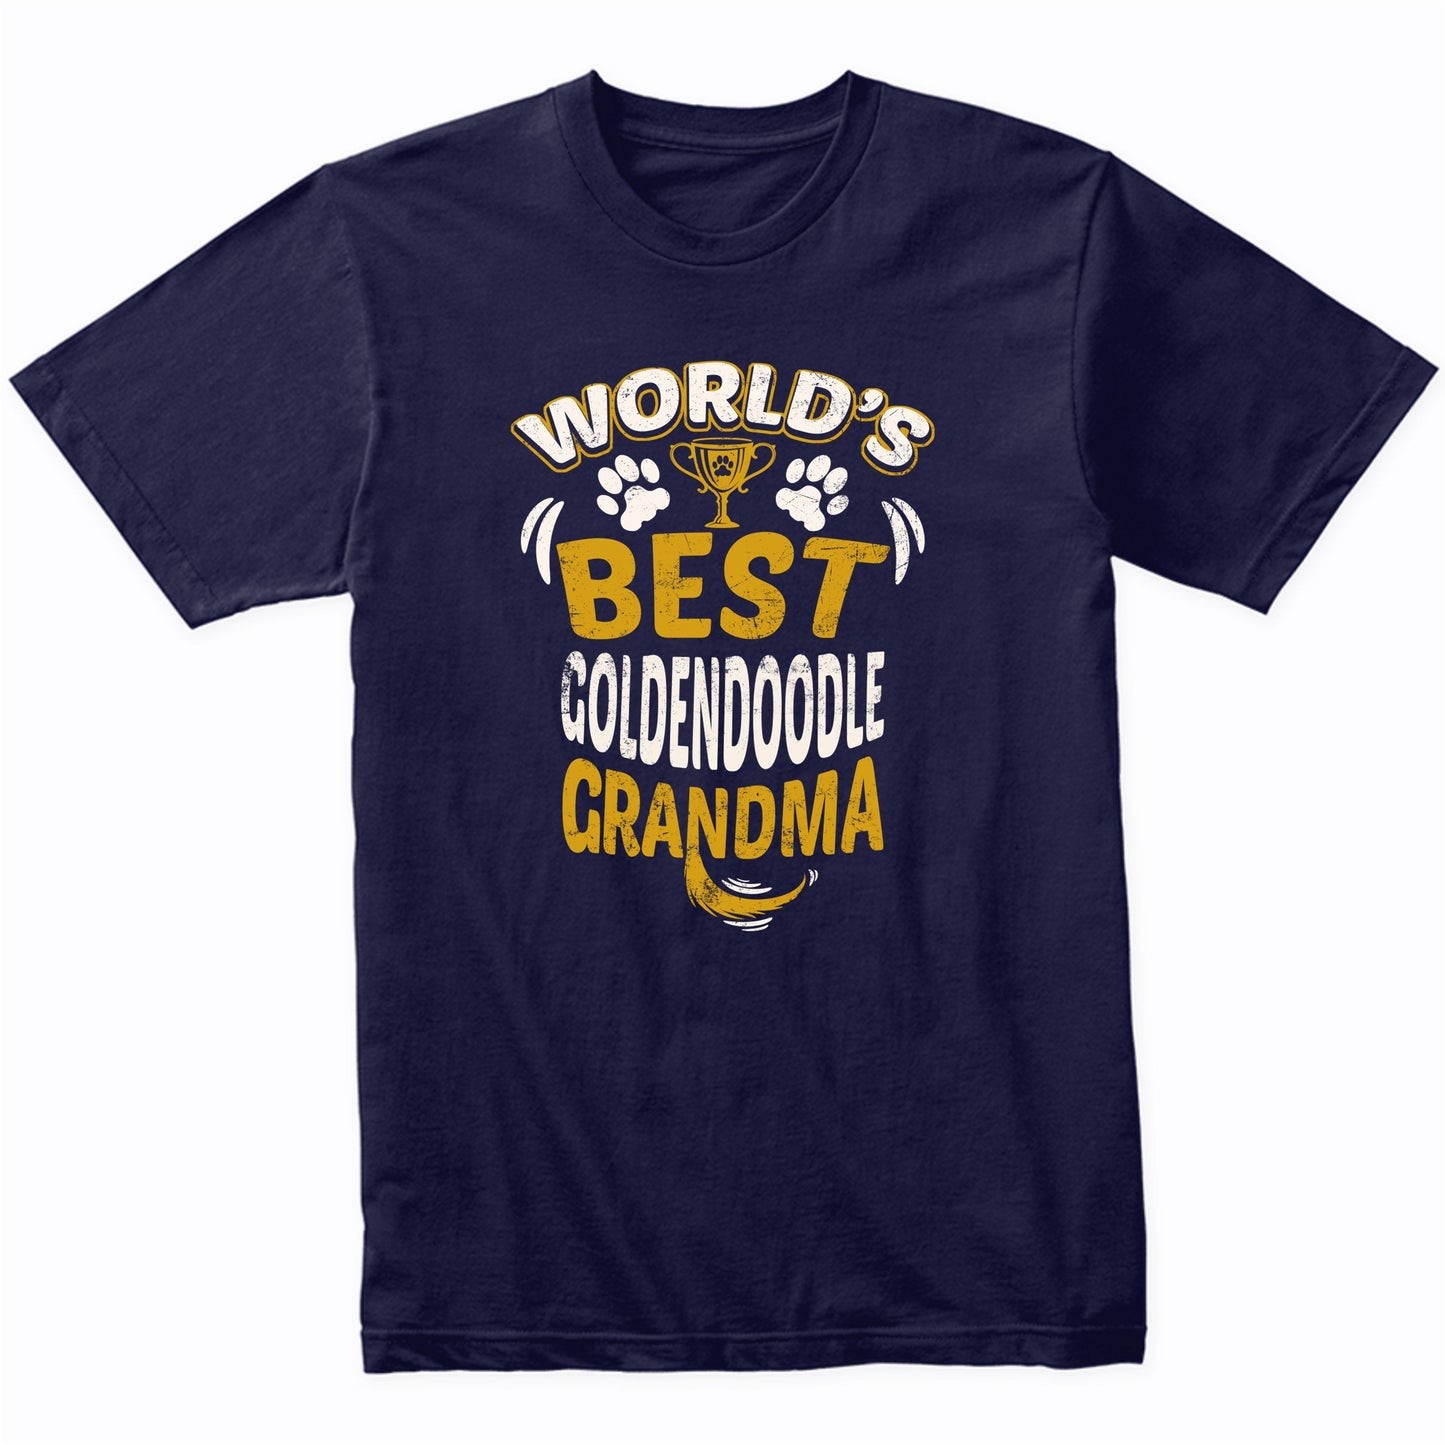 World's Best Goldendoodle Grandma Graphic T-Shirt